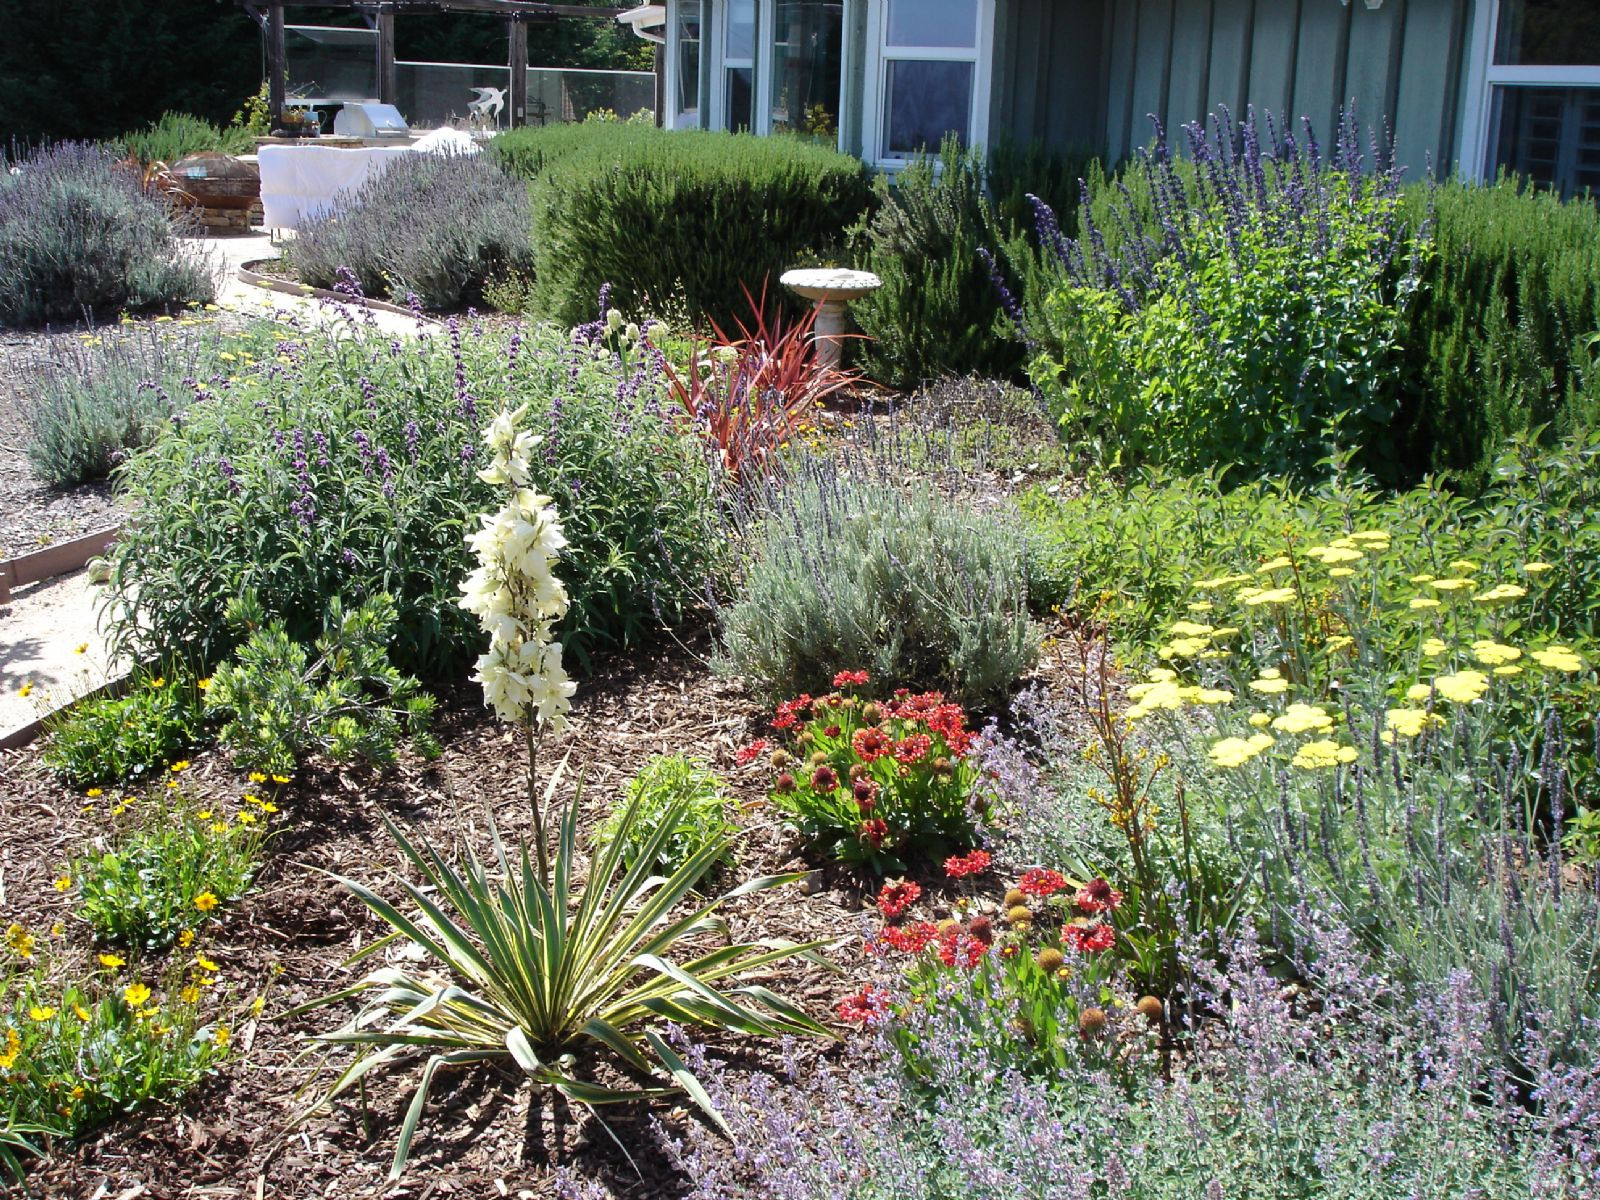 Best ideas about Drought Tolerant Plants Landscape Design
. Save or Pin Drought Tolerant Landscape Design Herbs — Home Ideas Now.